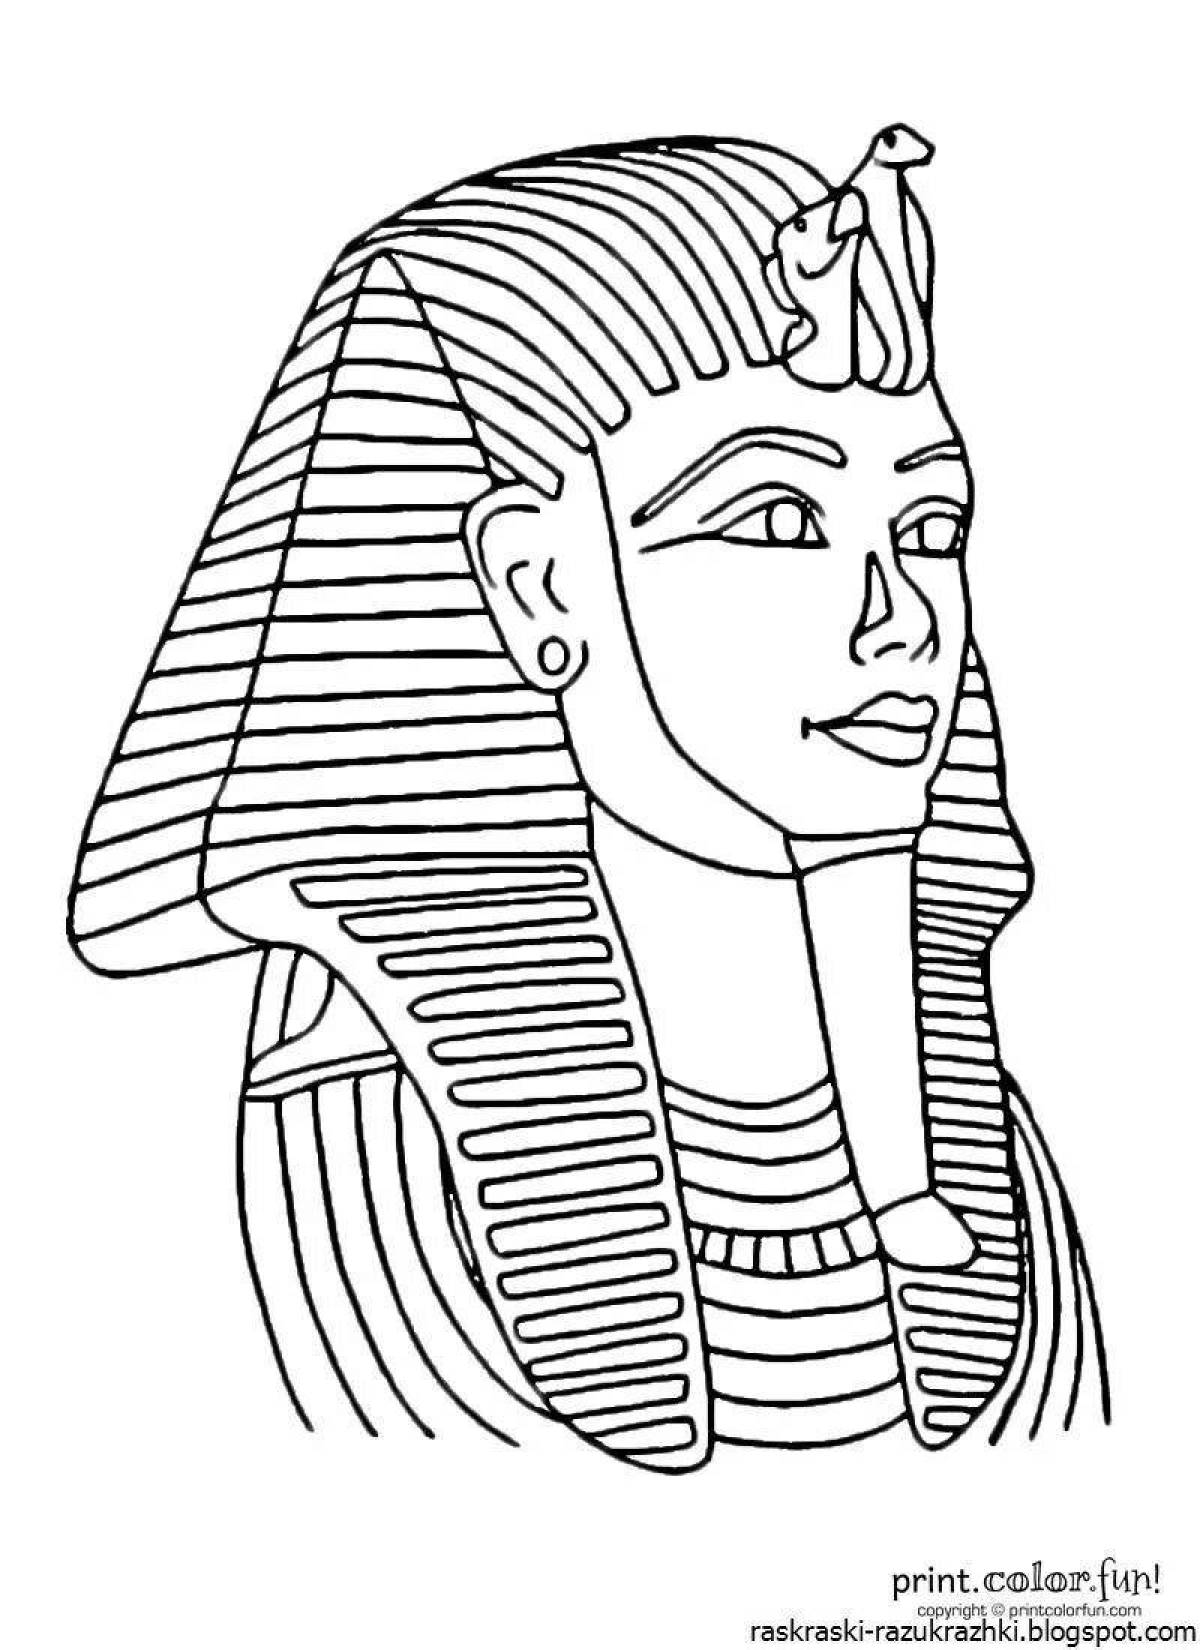 Маска фараона рисунок 5. Фараон Египта Тутанхамон. Фараон Египта Тутанхамон изо 5 класс. Тутанхамон фараон древнего Египта рисунок. Египетский фараон Тутанхамон раскраска.